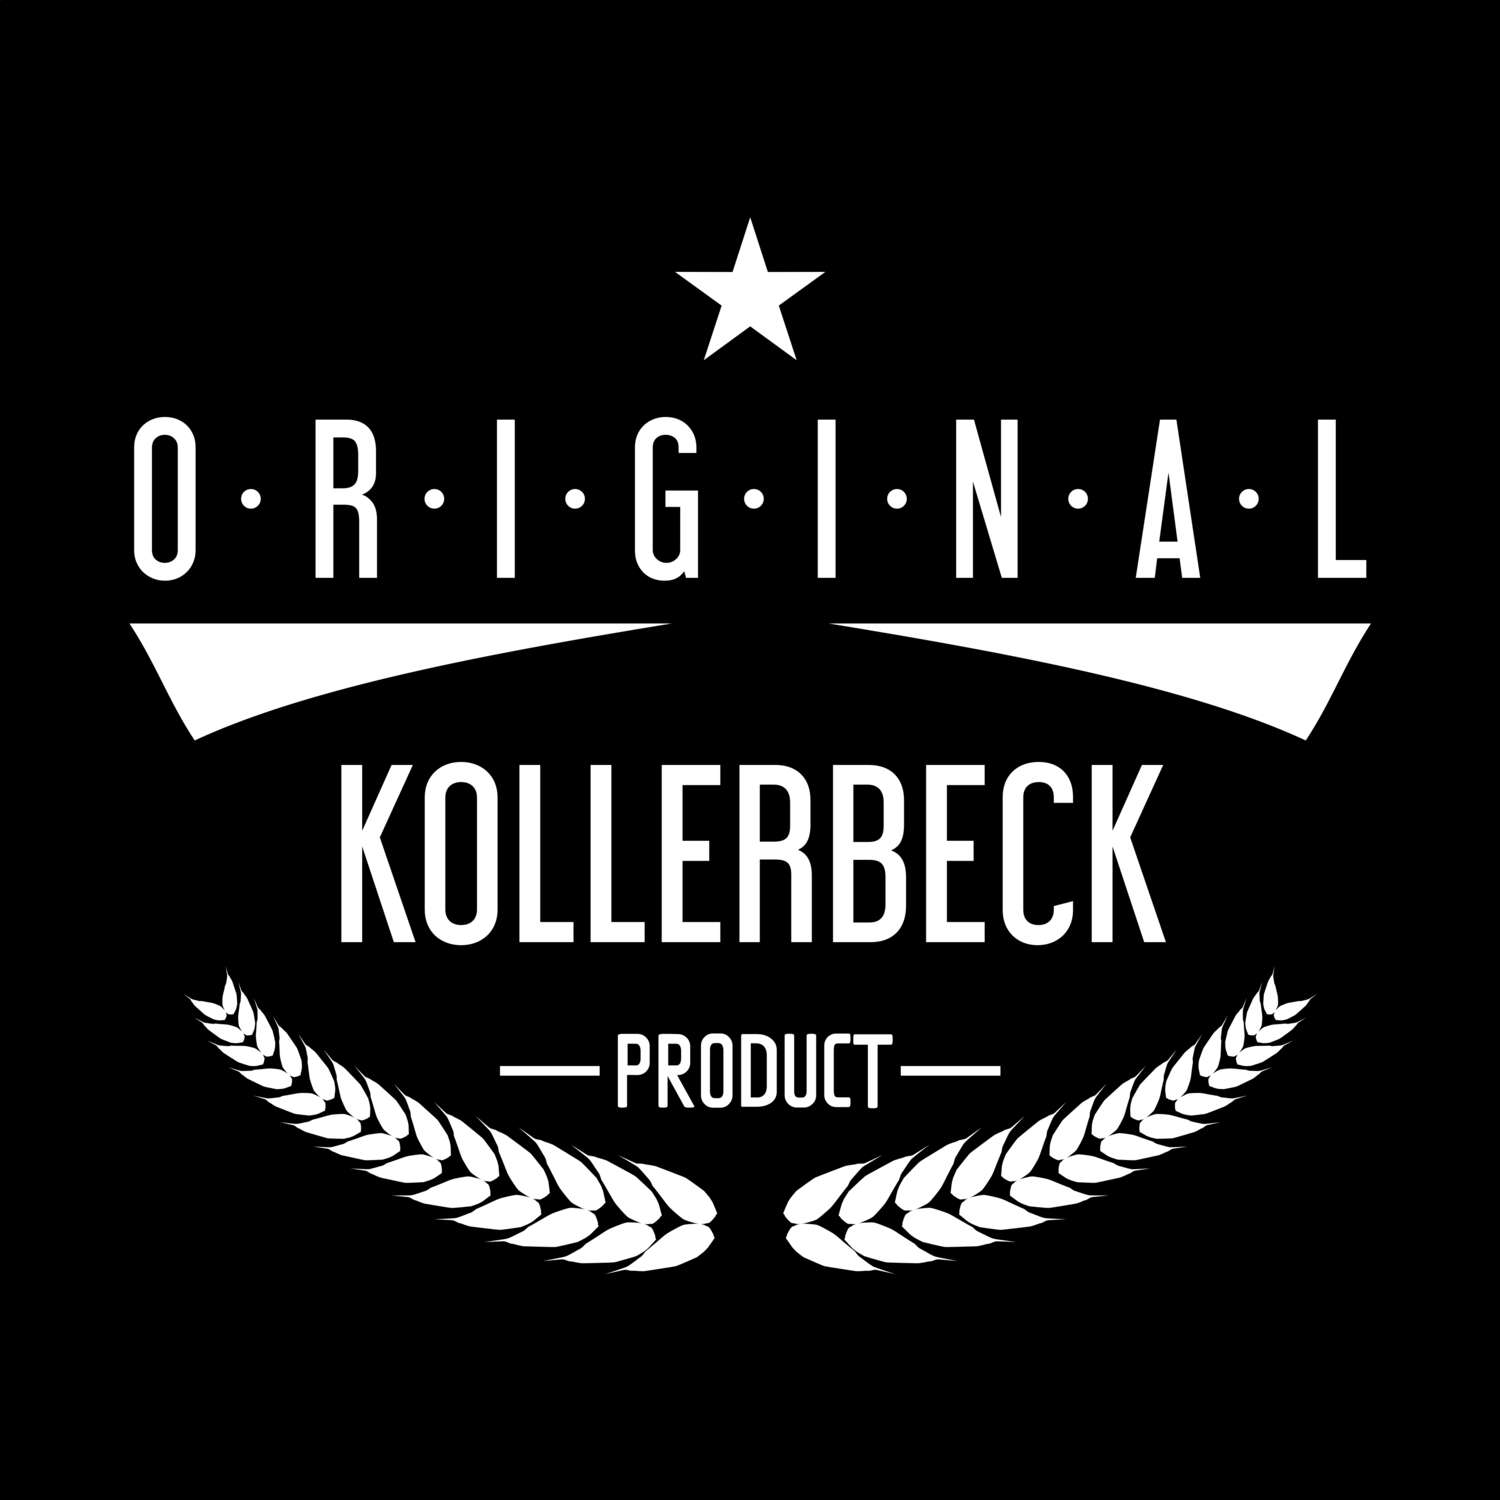 Kollerbeck T-Shirt »Original Product«